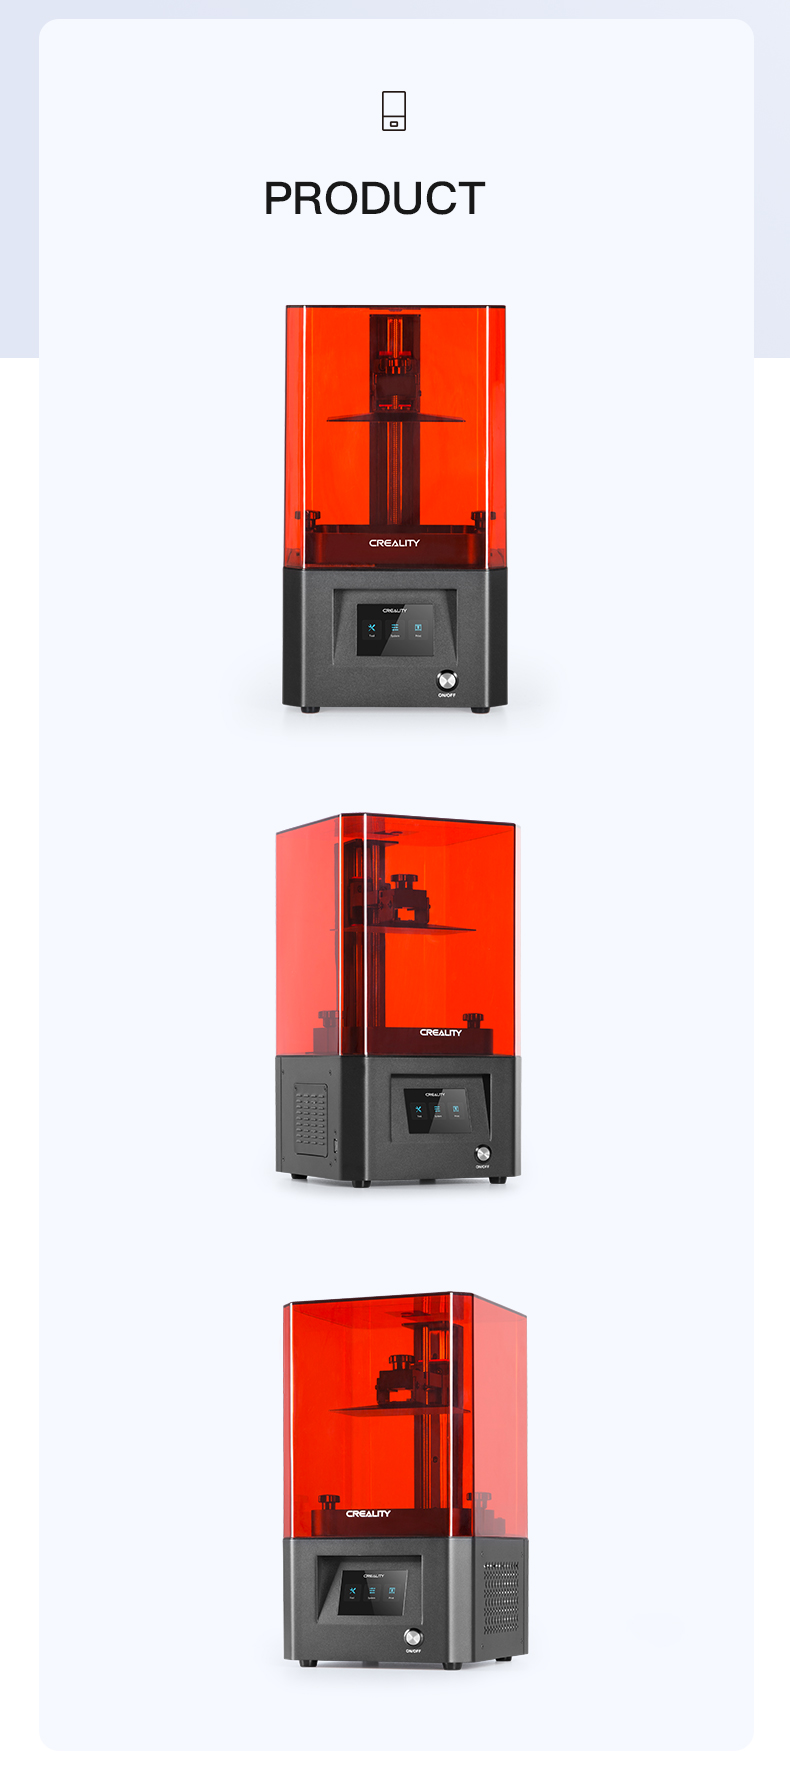 LD-002H Resin 3D Printer